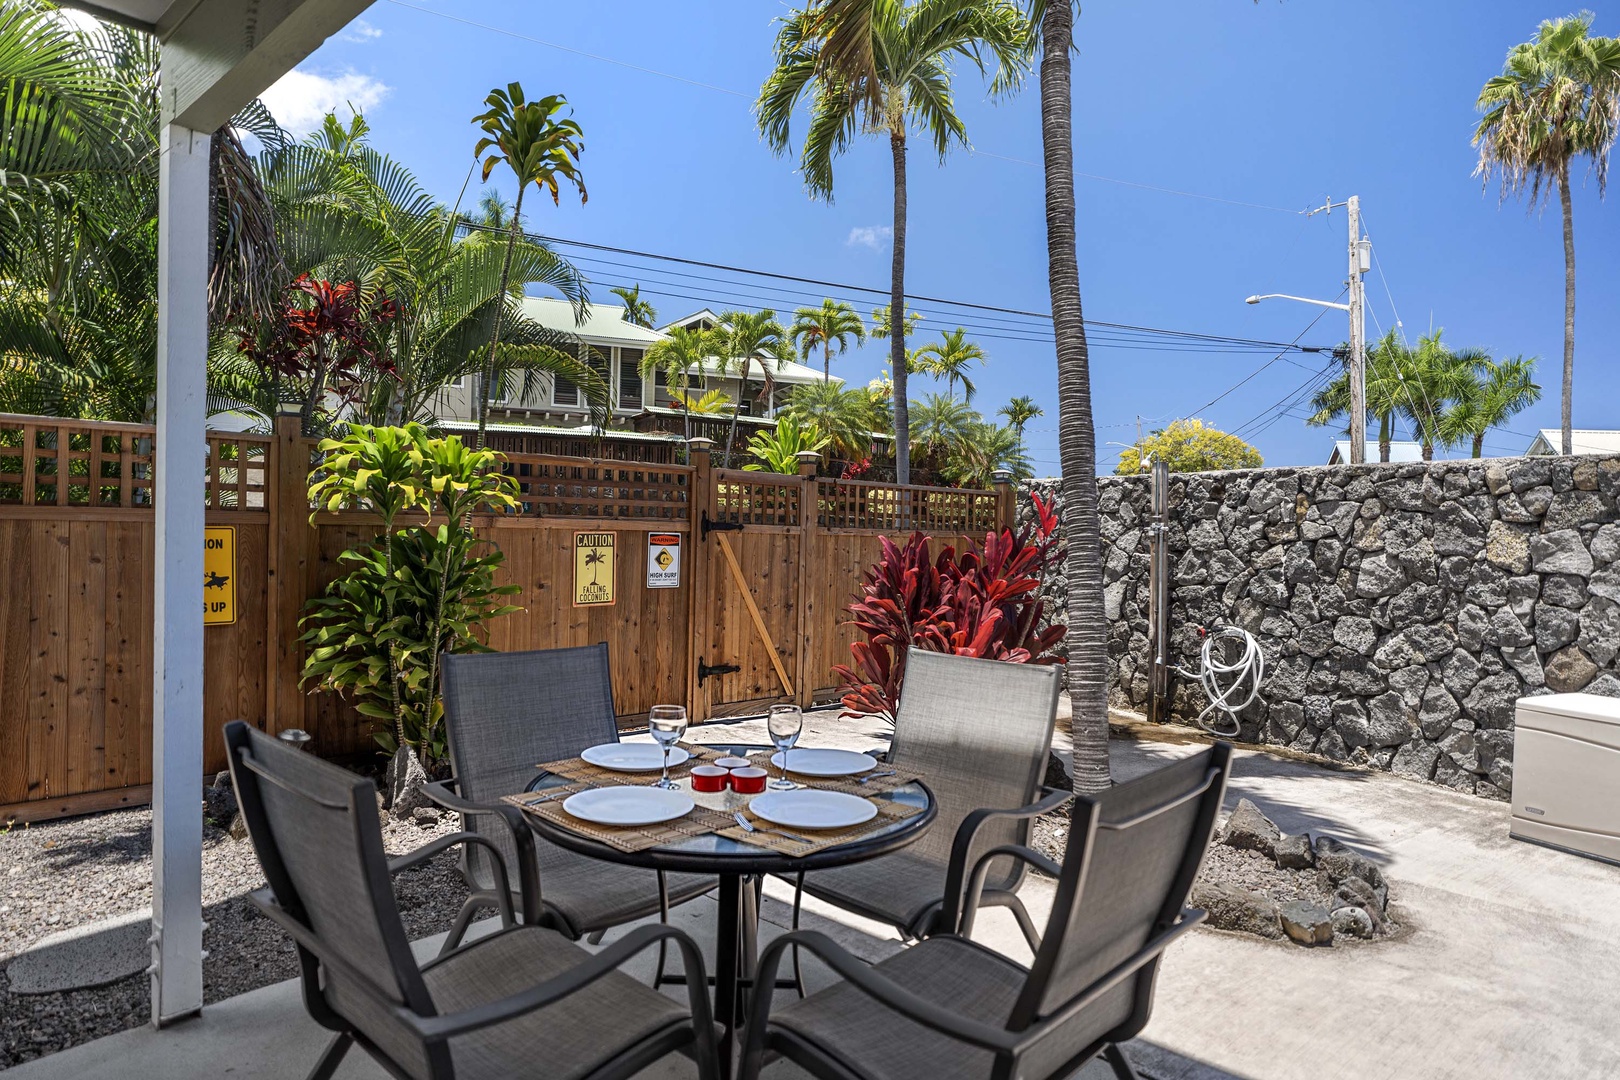 Kailua Kona Vacation Rentals, Hale A Kai - Additional outdoor seating